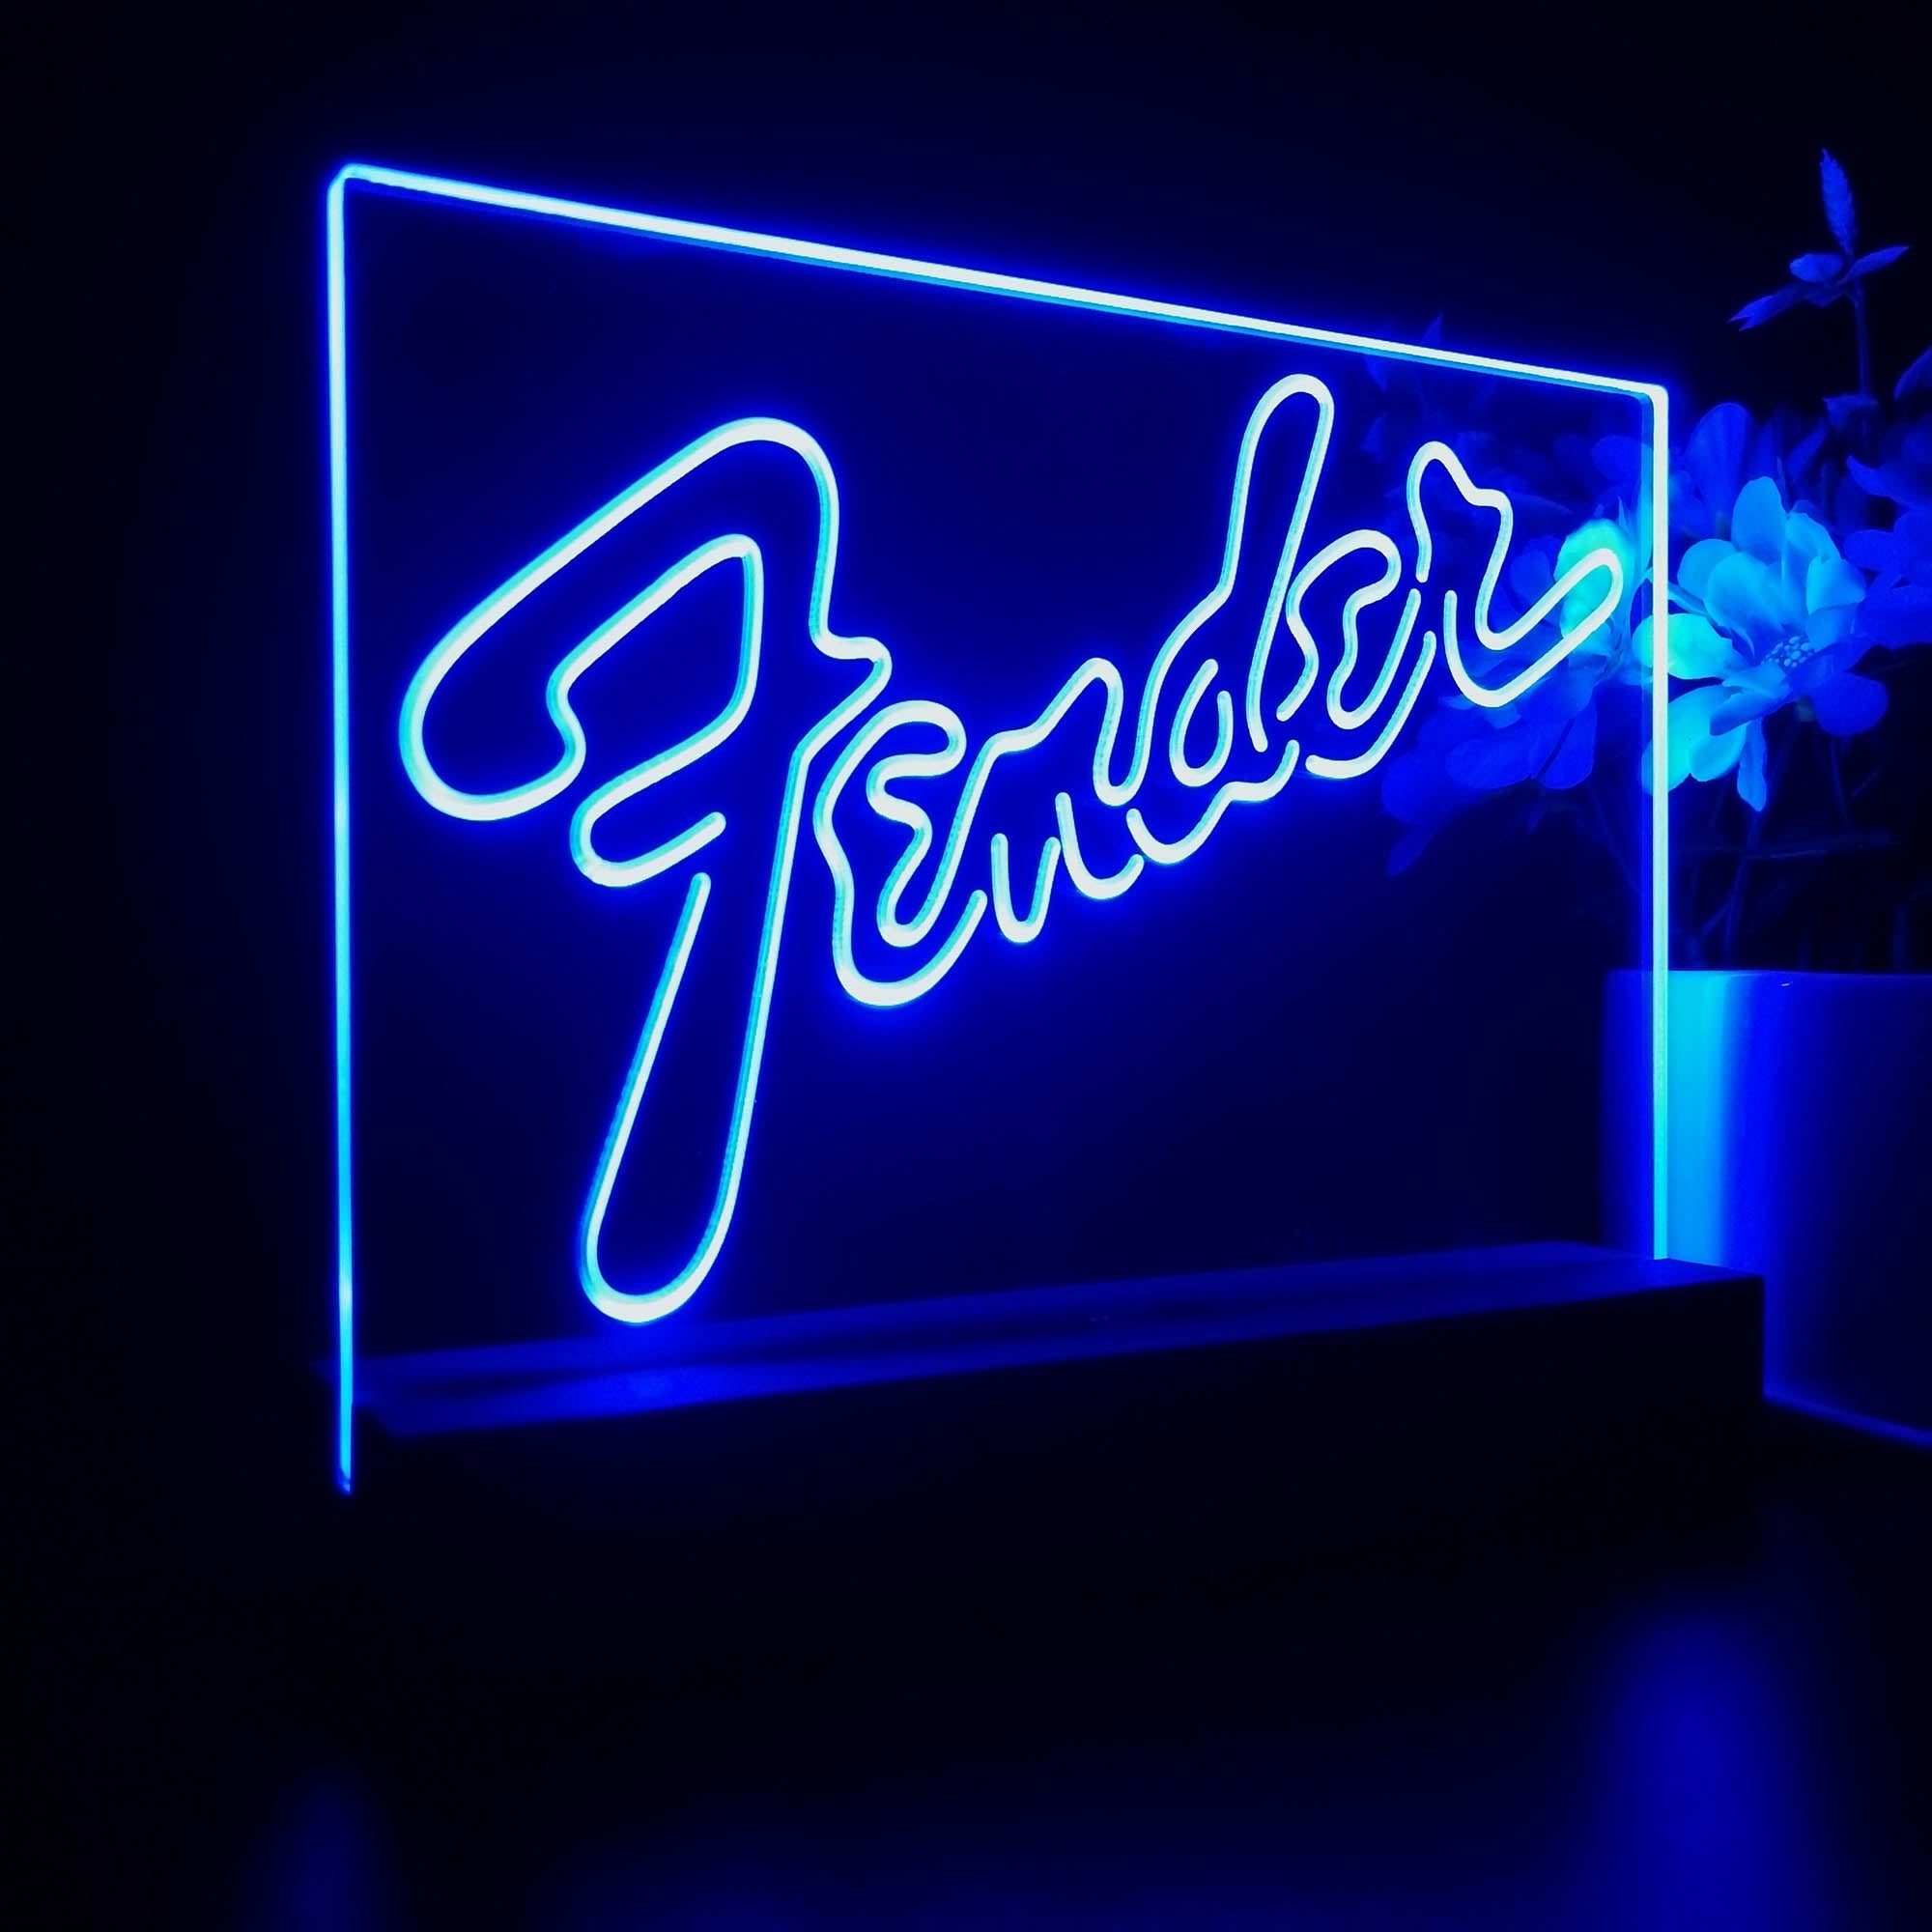 Fender Guitar 3D LED Illusion Night Light